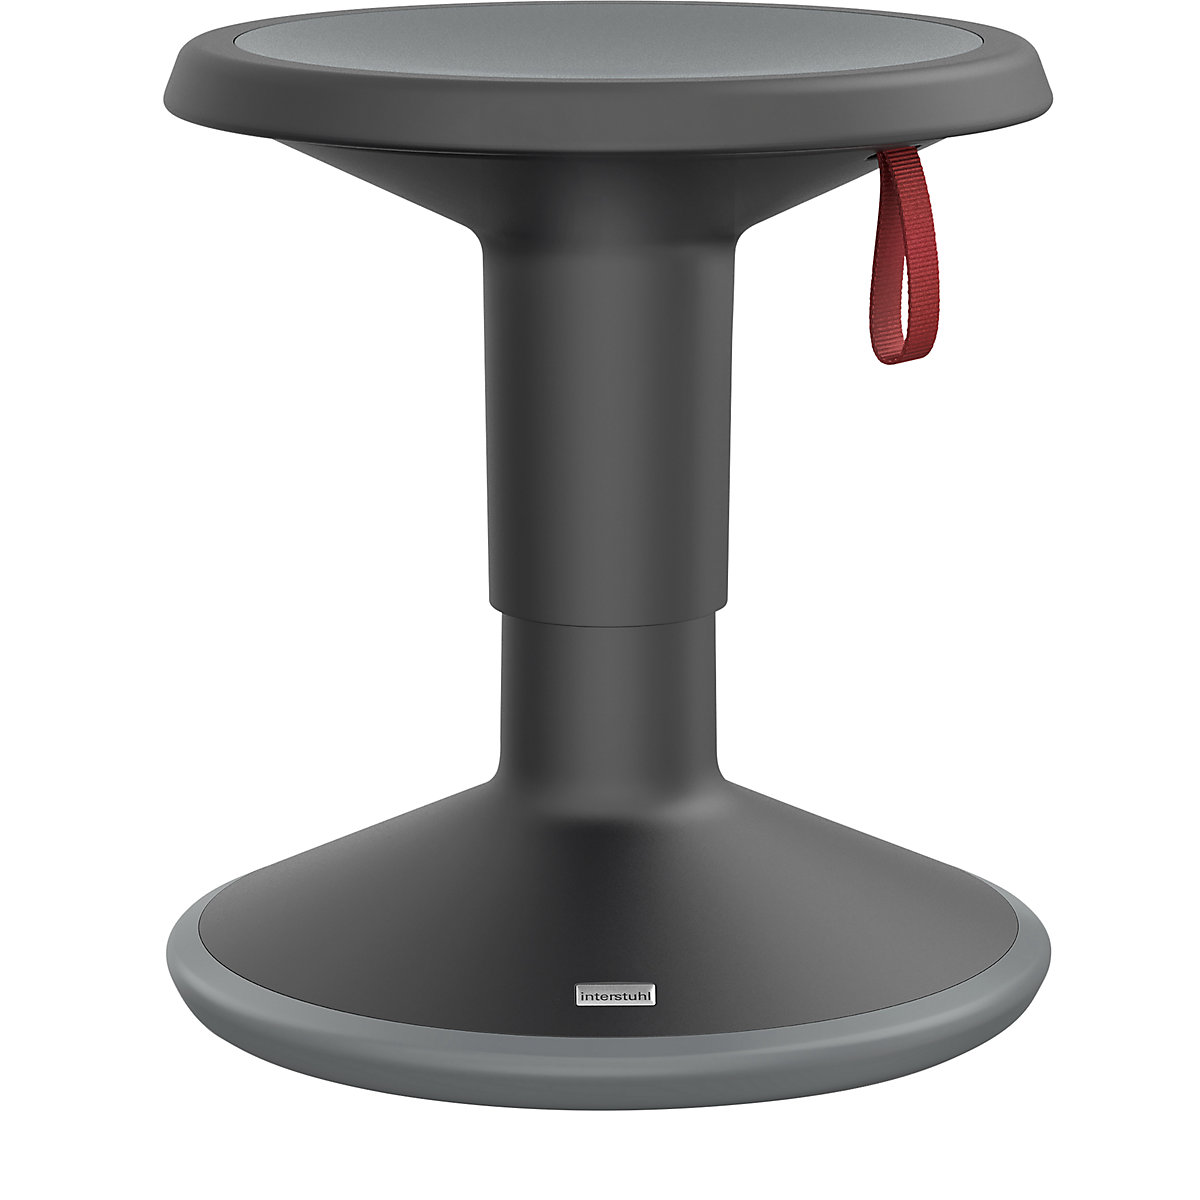 UP multifunctional stool - interstuhl